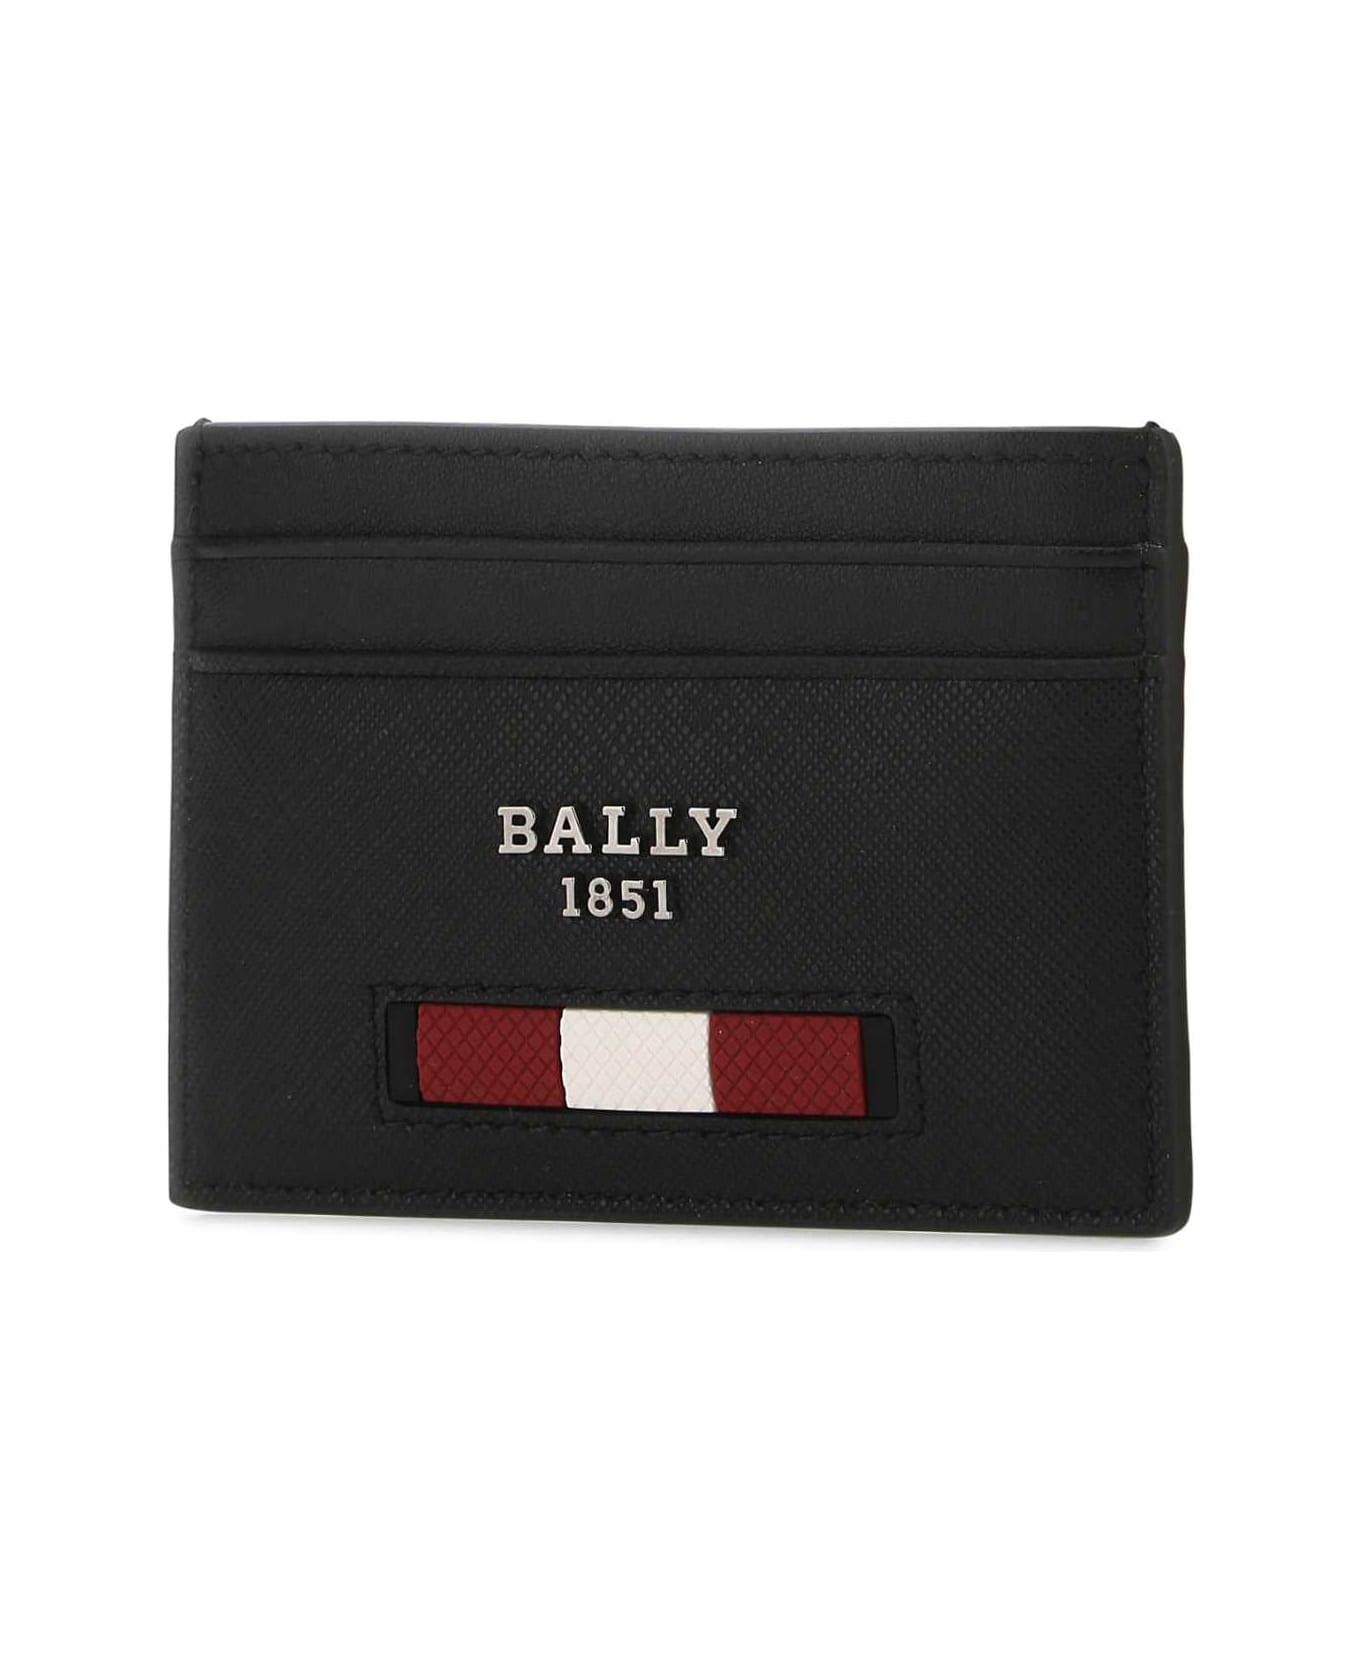 Bally Black Leather Card Holder - Black 財布